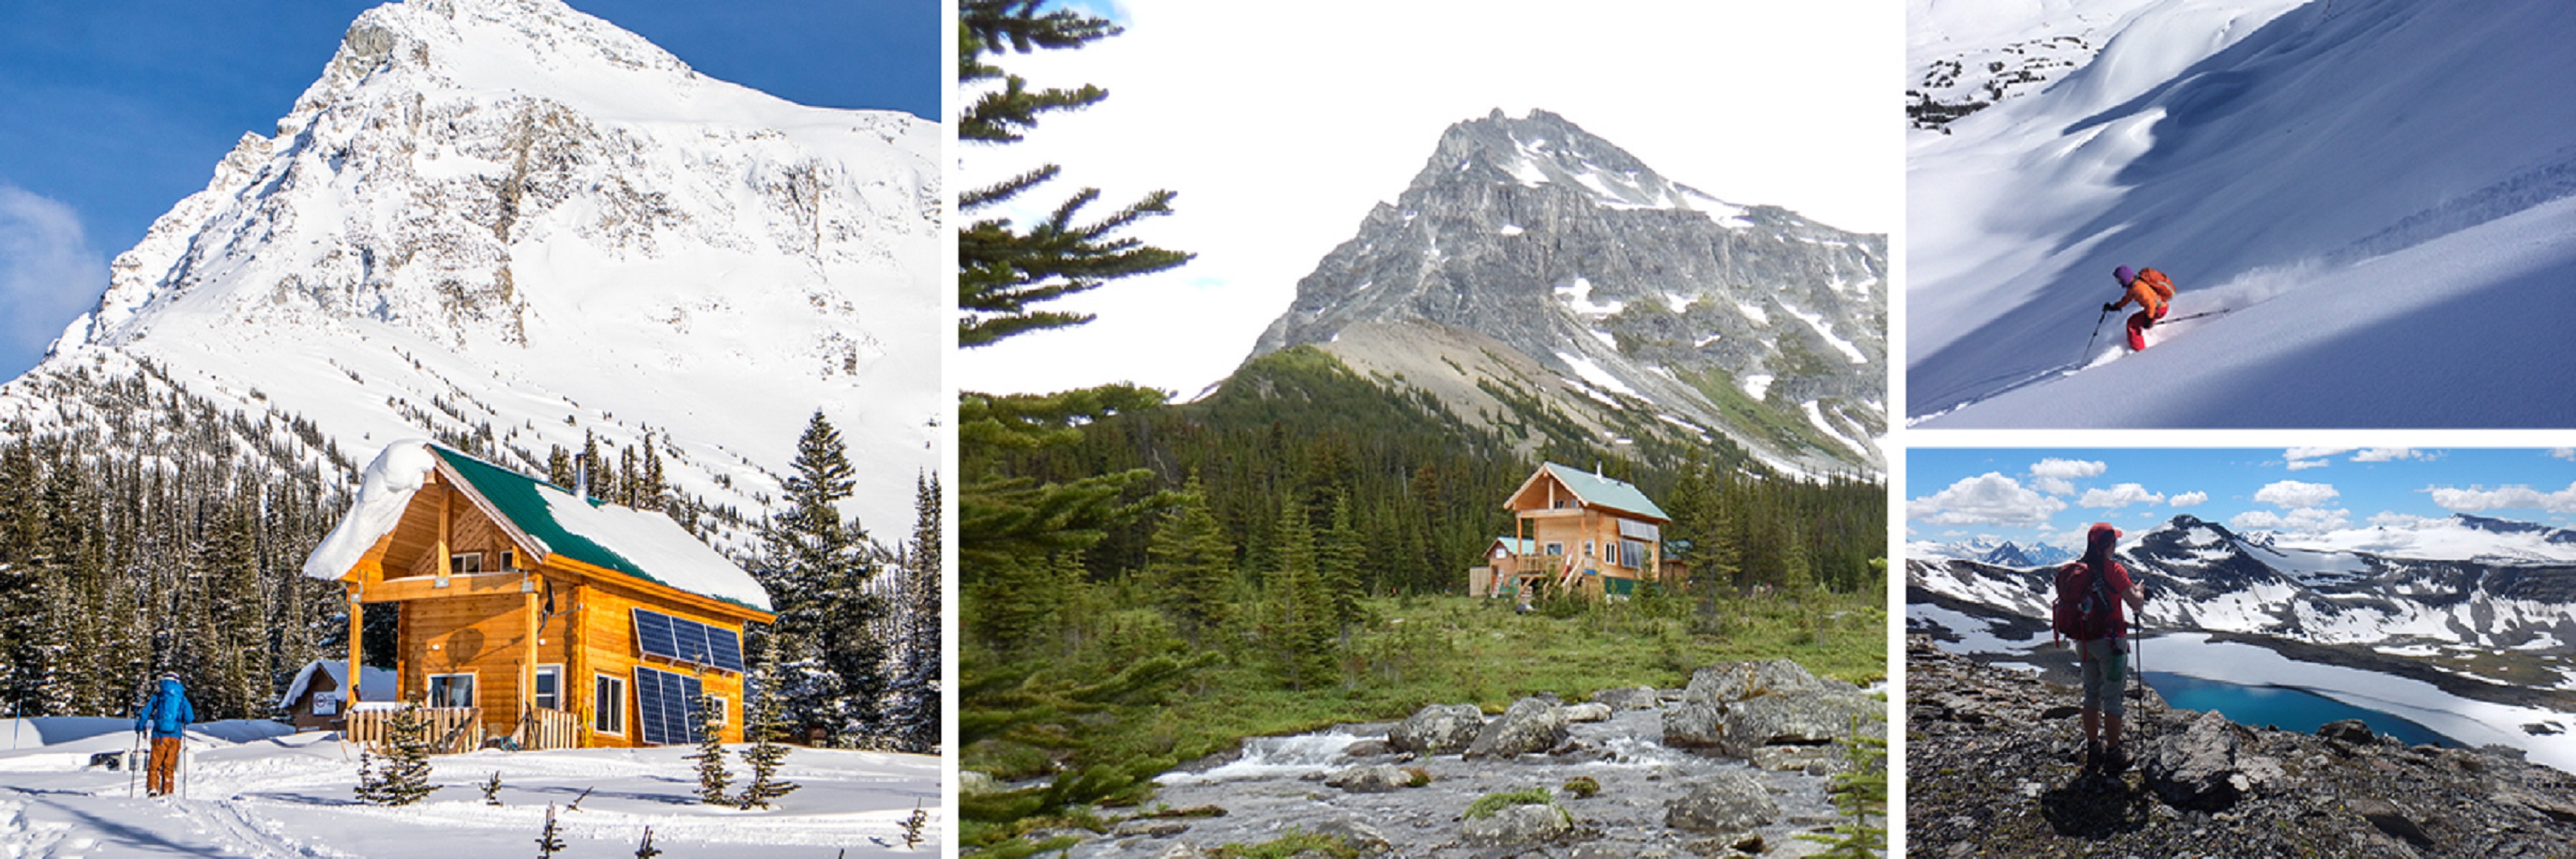 Canadian Adventure Company's Mallard Mountain Lodge ~ April 2 2019